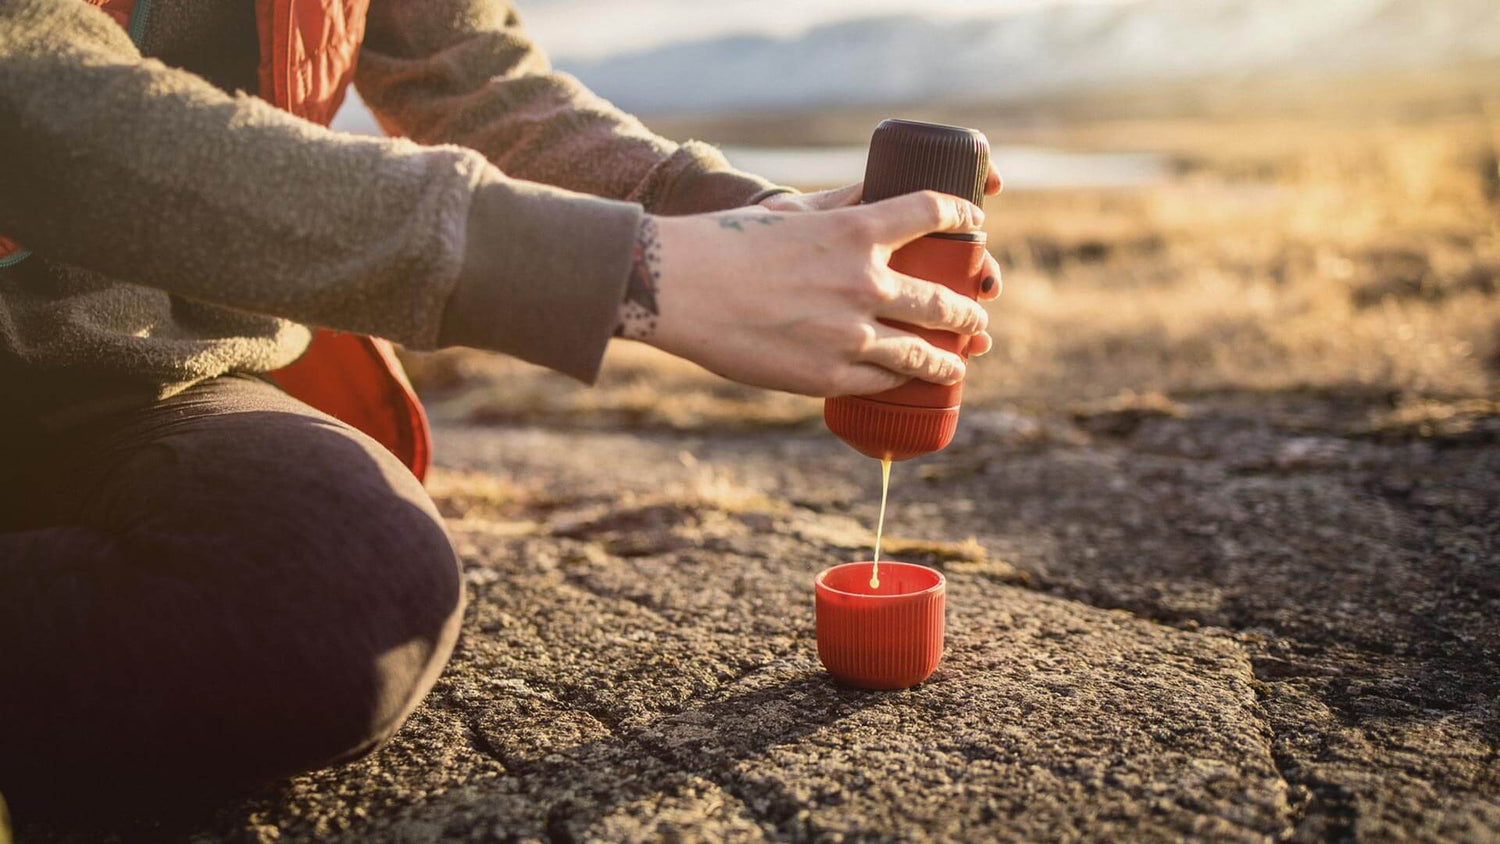 WACACO Picopresso handheld portable espresso maker creates an incredibly  fine grind » Gadget Flow